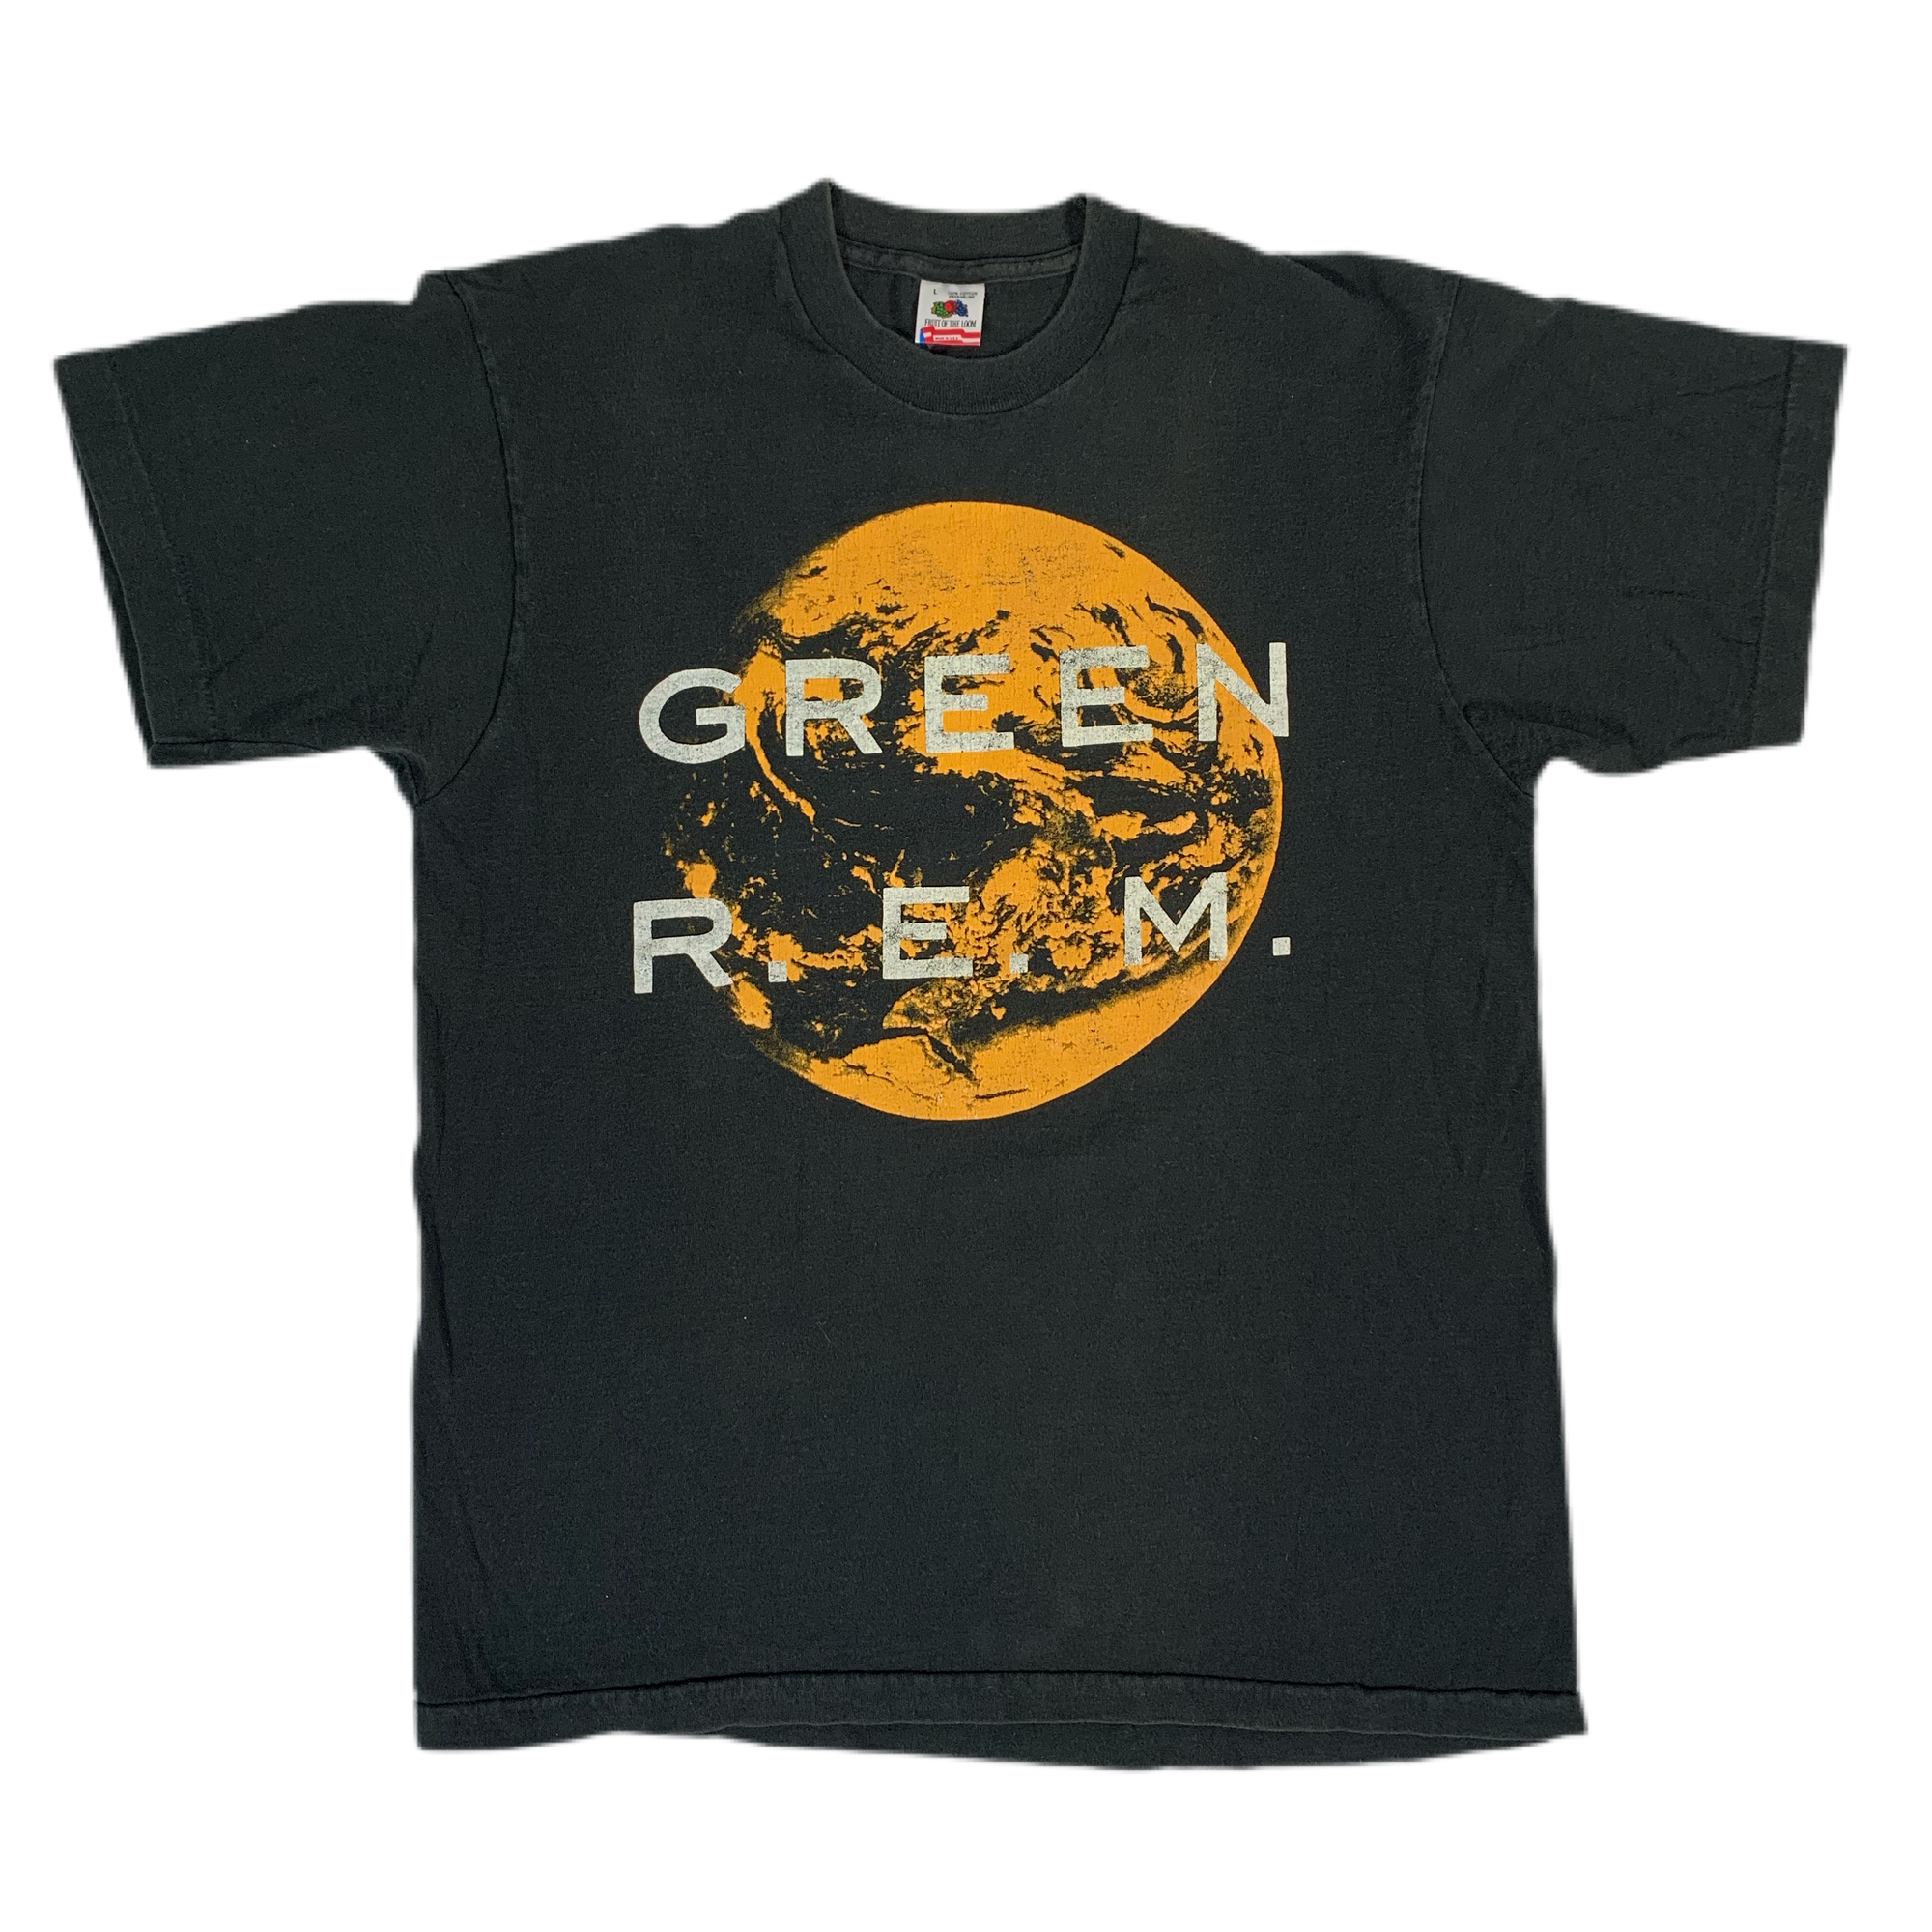 Vintage R.E.M. "Green" T-shirt - jointcustodydc